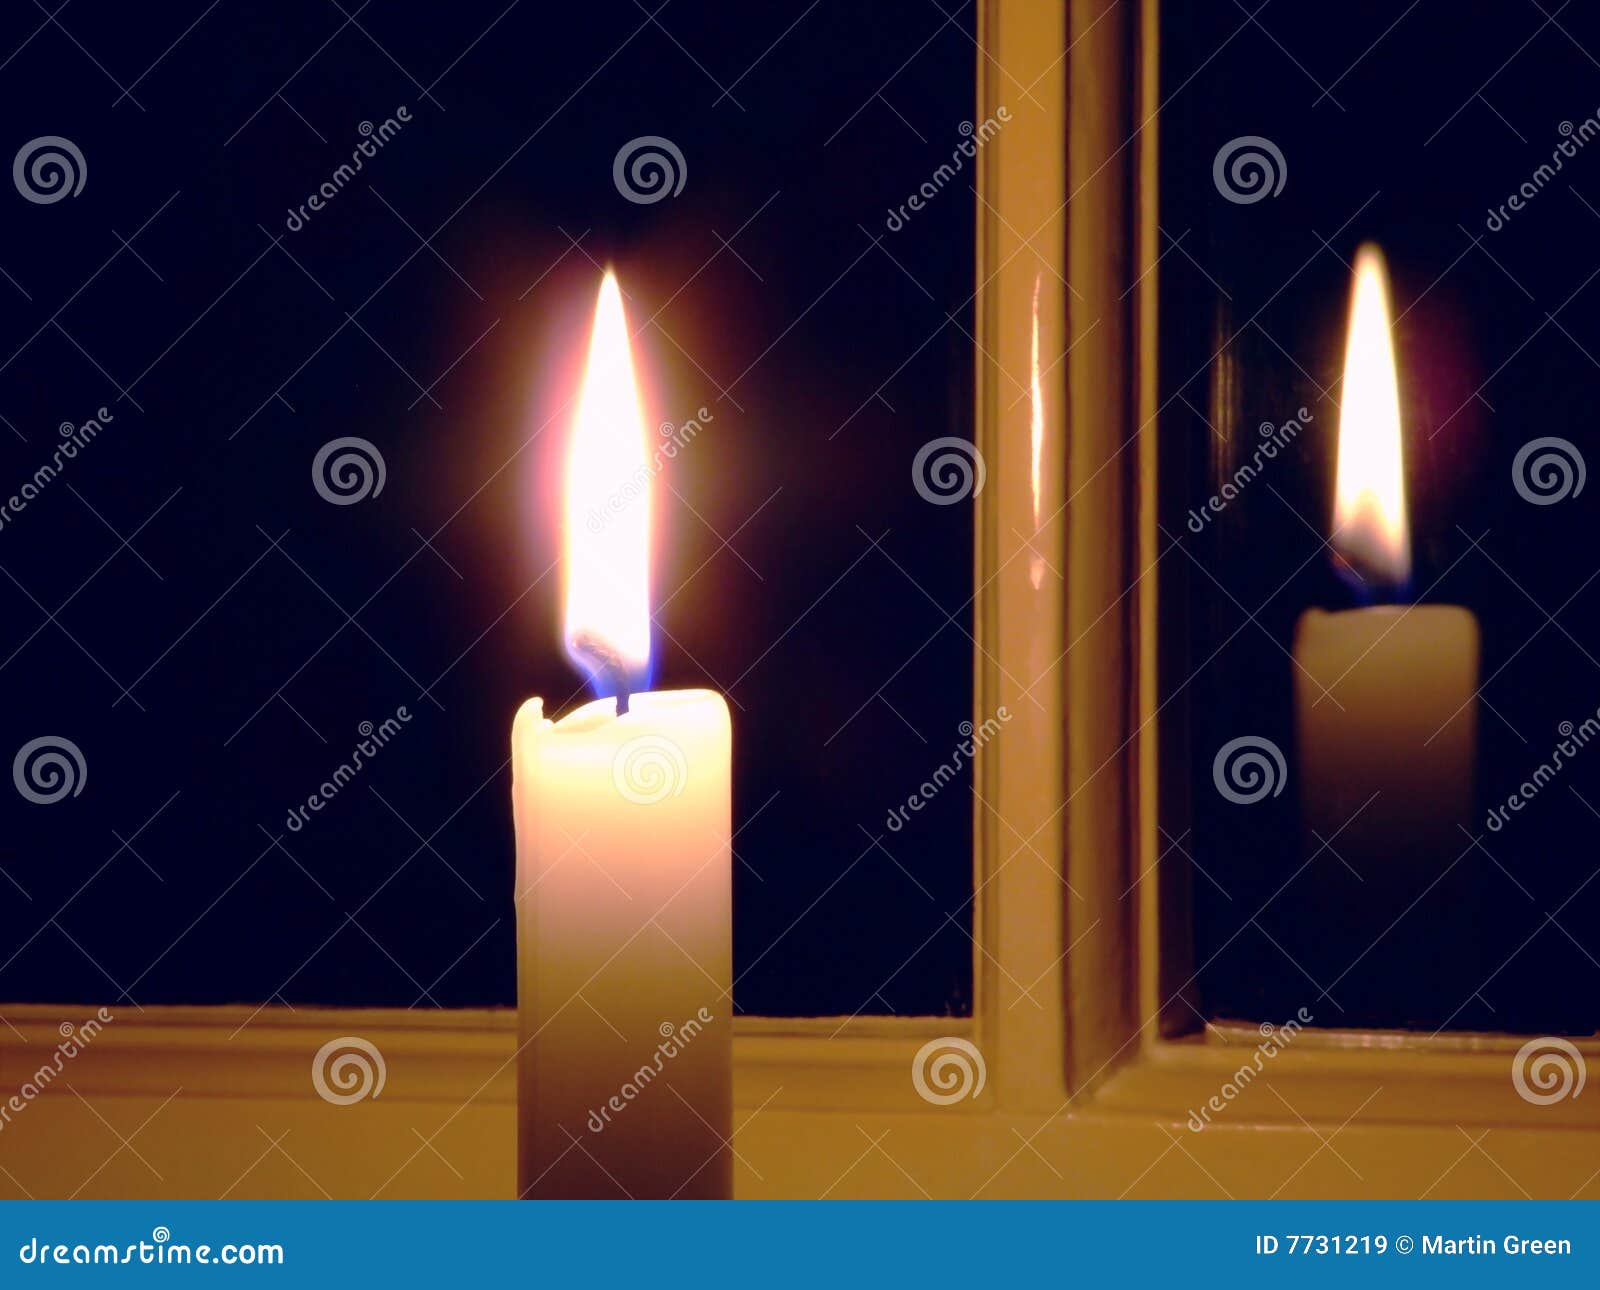 Погасли в окнах свечи. Свеча в окне. Свеча на подоконнике. Горящие свечи на окне. Свечка на подоконнике.